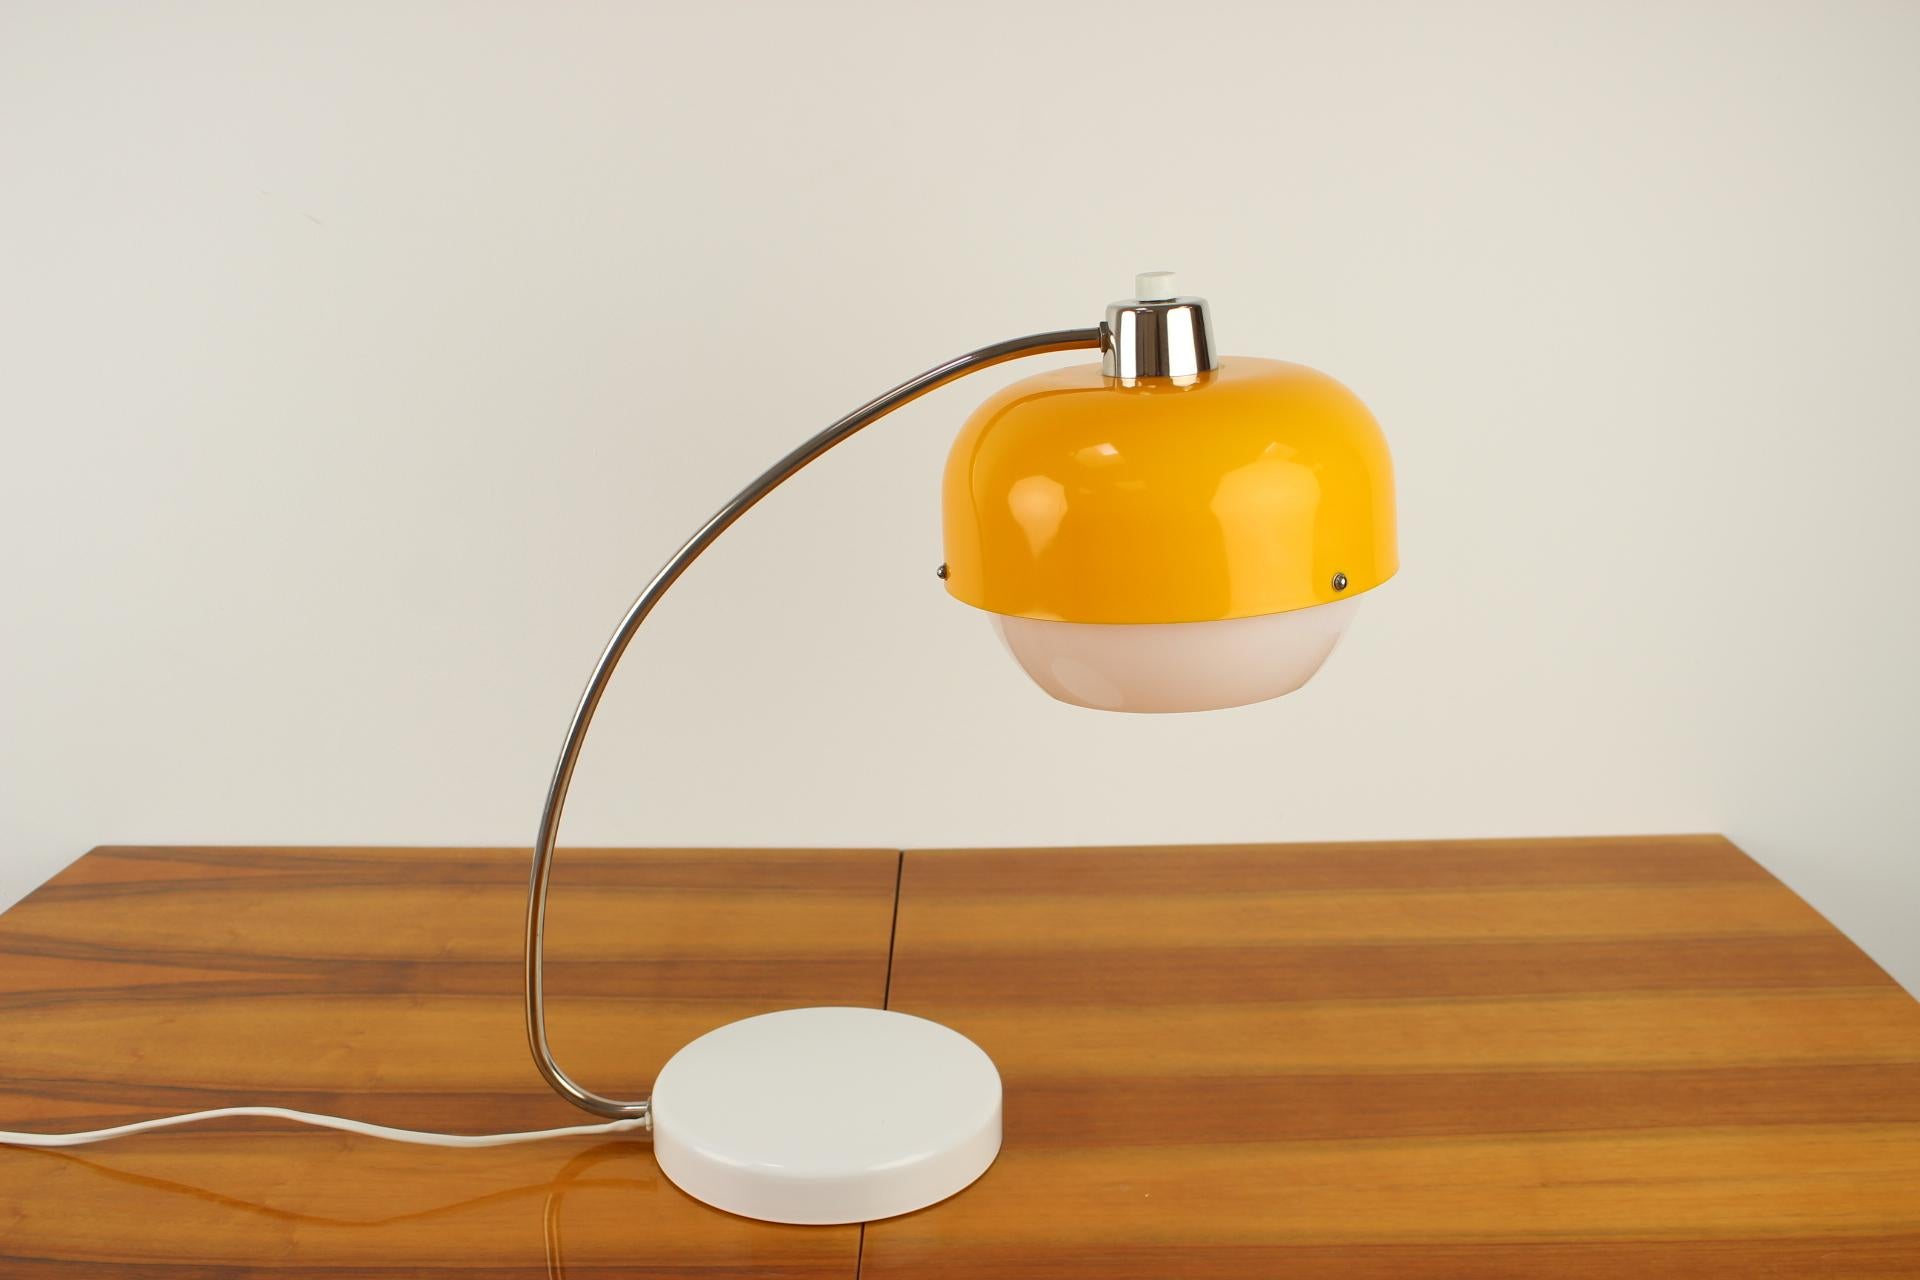 Italian Design Table Lamp in Style of Guzzini, 1970's For Sale